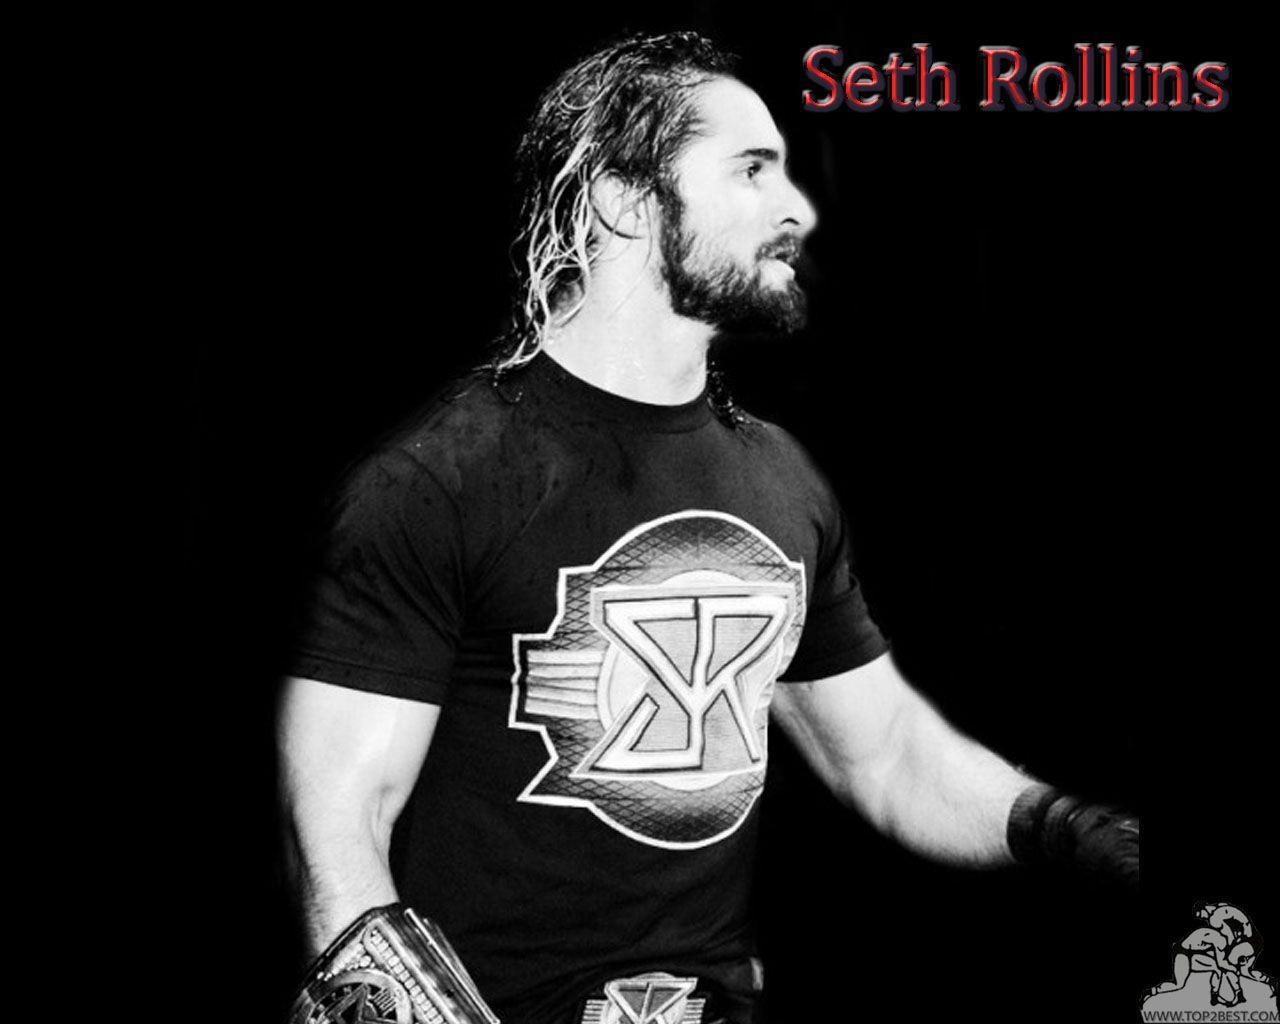 Seth Rollins Wallpaper 2015 Champion & Future of WWE